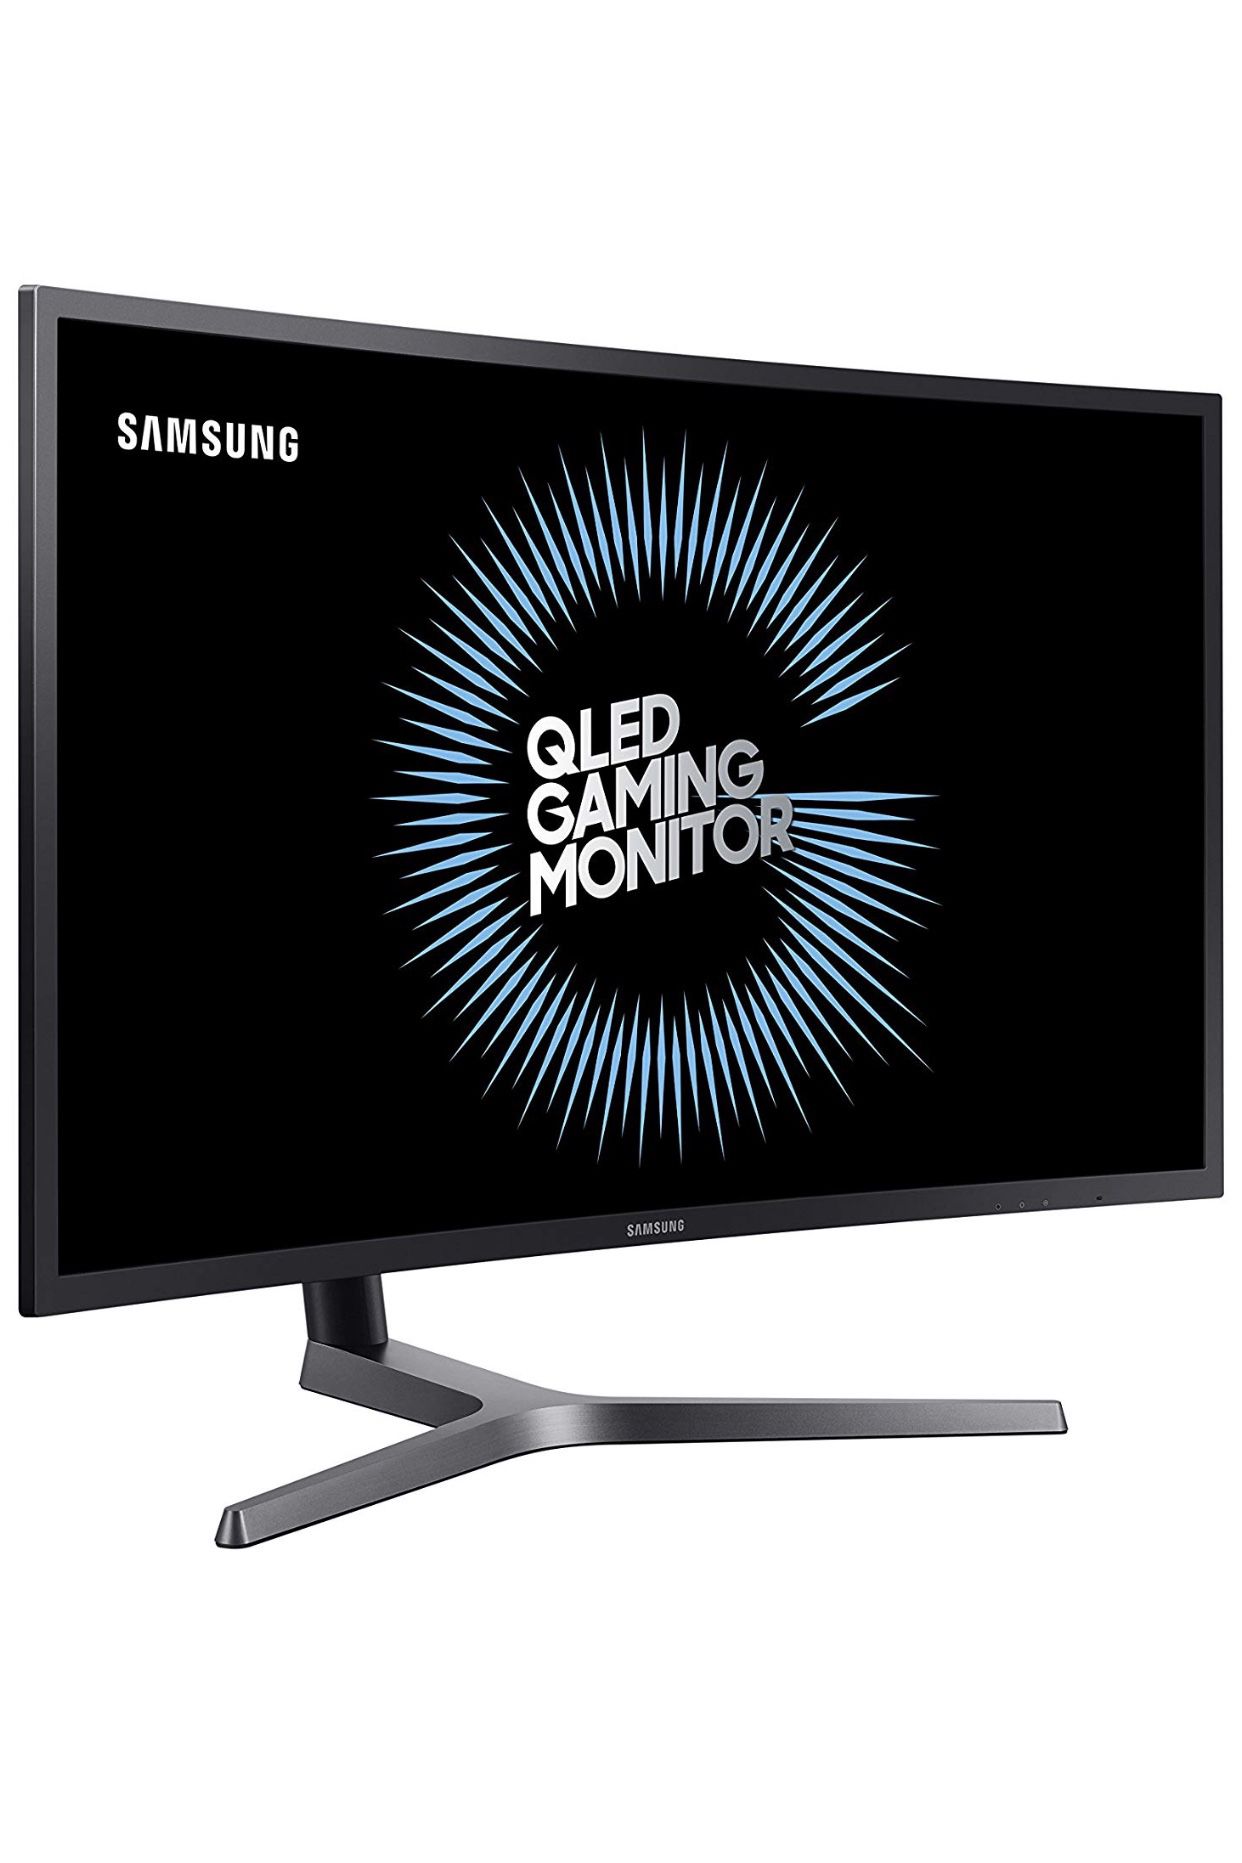 Samsung QLED gaming monitor 27” 144hz 1440p Chg70 Gsync/FreeSync compatible Curved Display